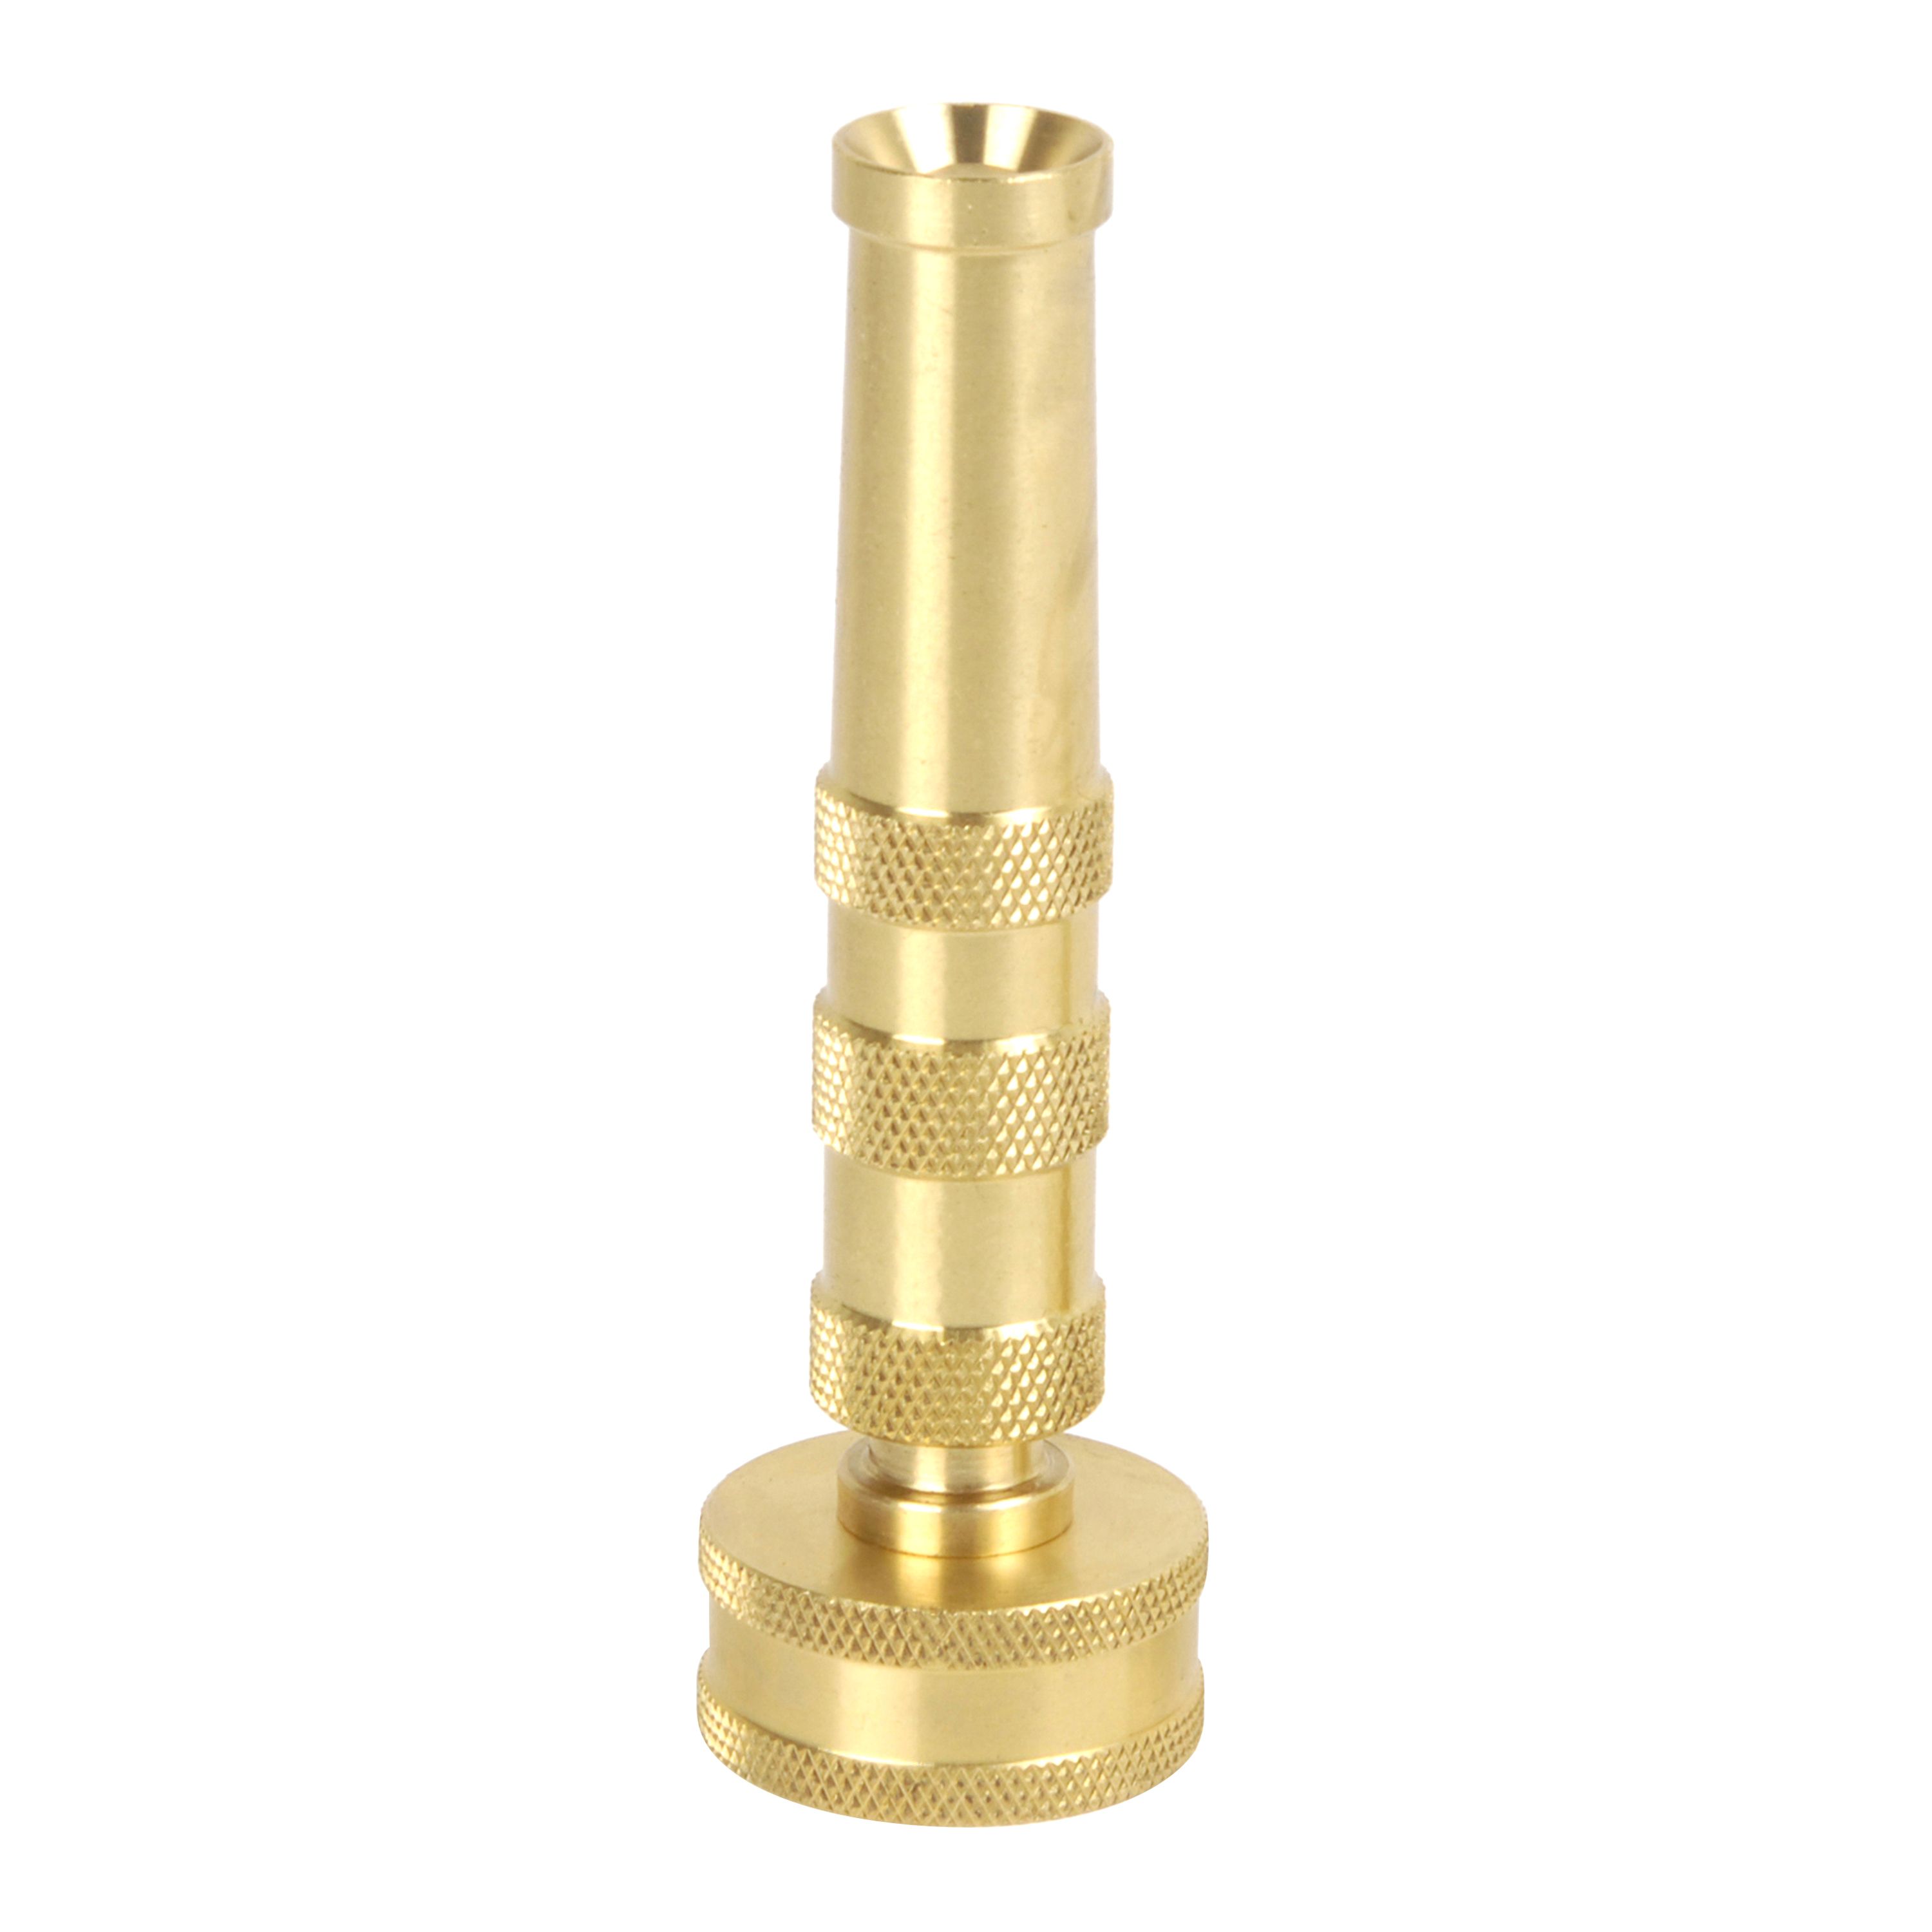 Details about   Solid Brass Garden Nozzle Heavy Duty 4" Adjustable Twist Water Hose Nozzle 